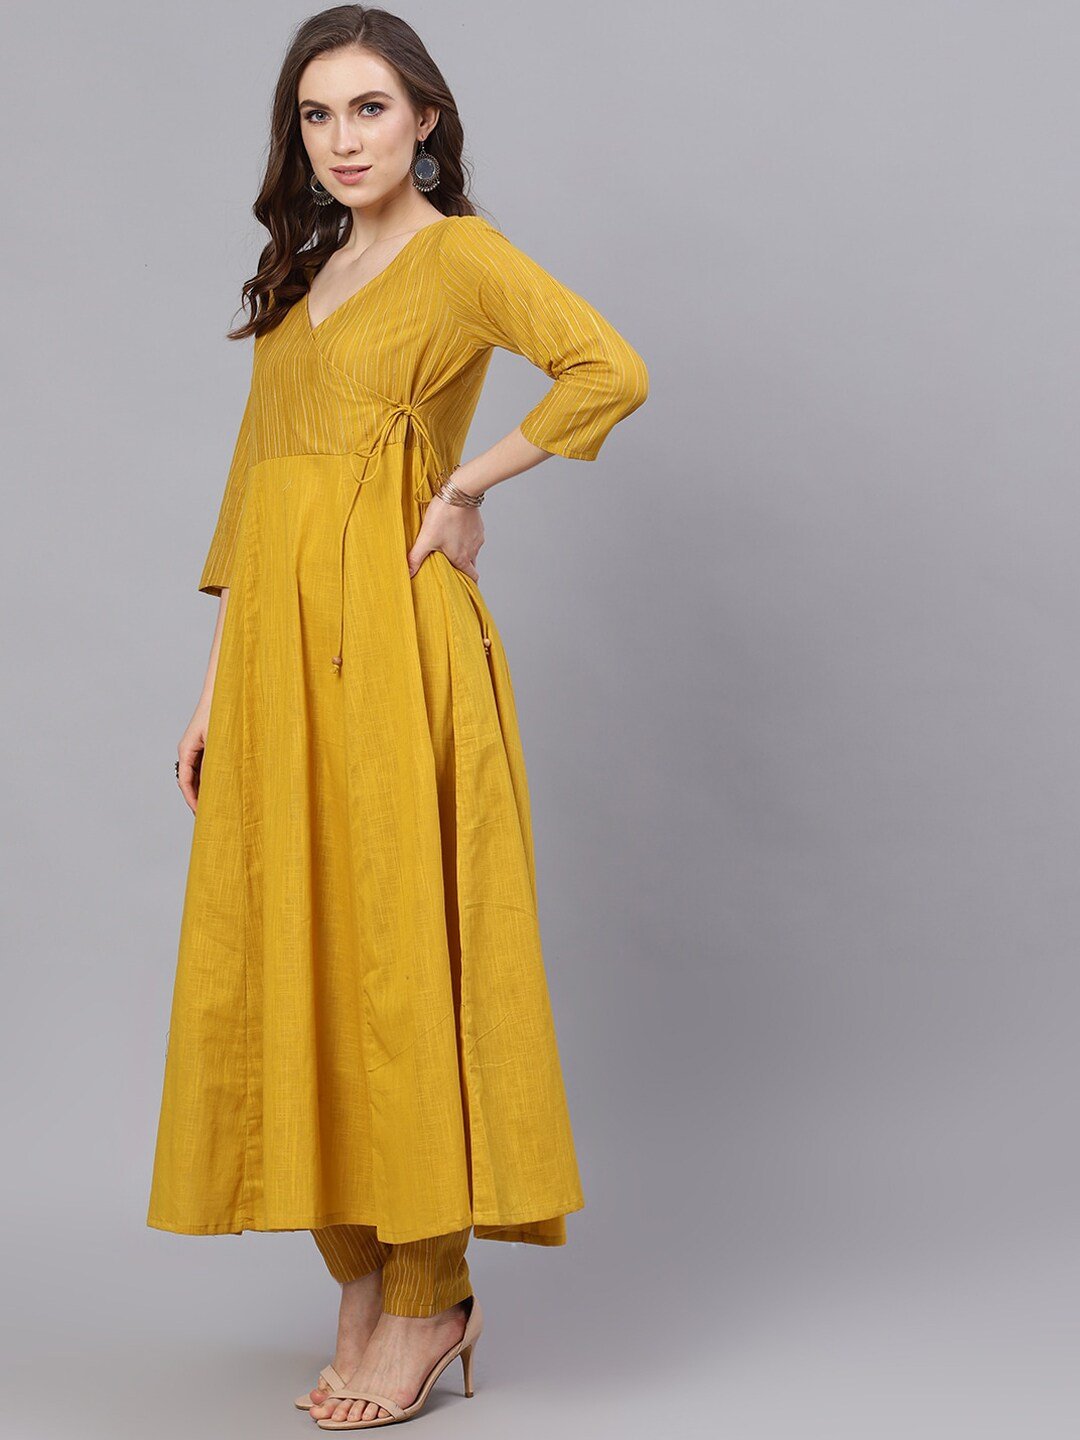 Women's  Mustard Yellow Striped Anarkali Kurta - AKS